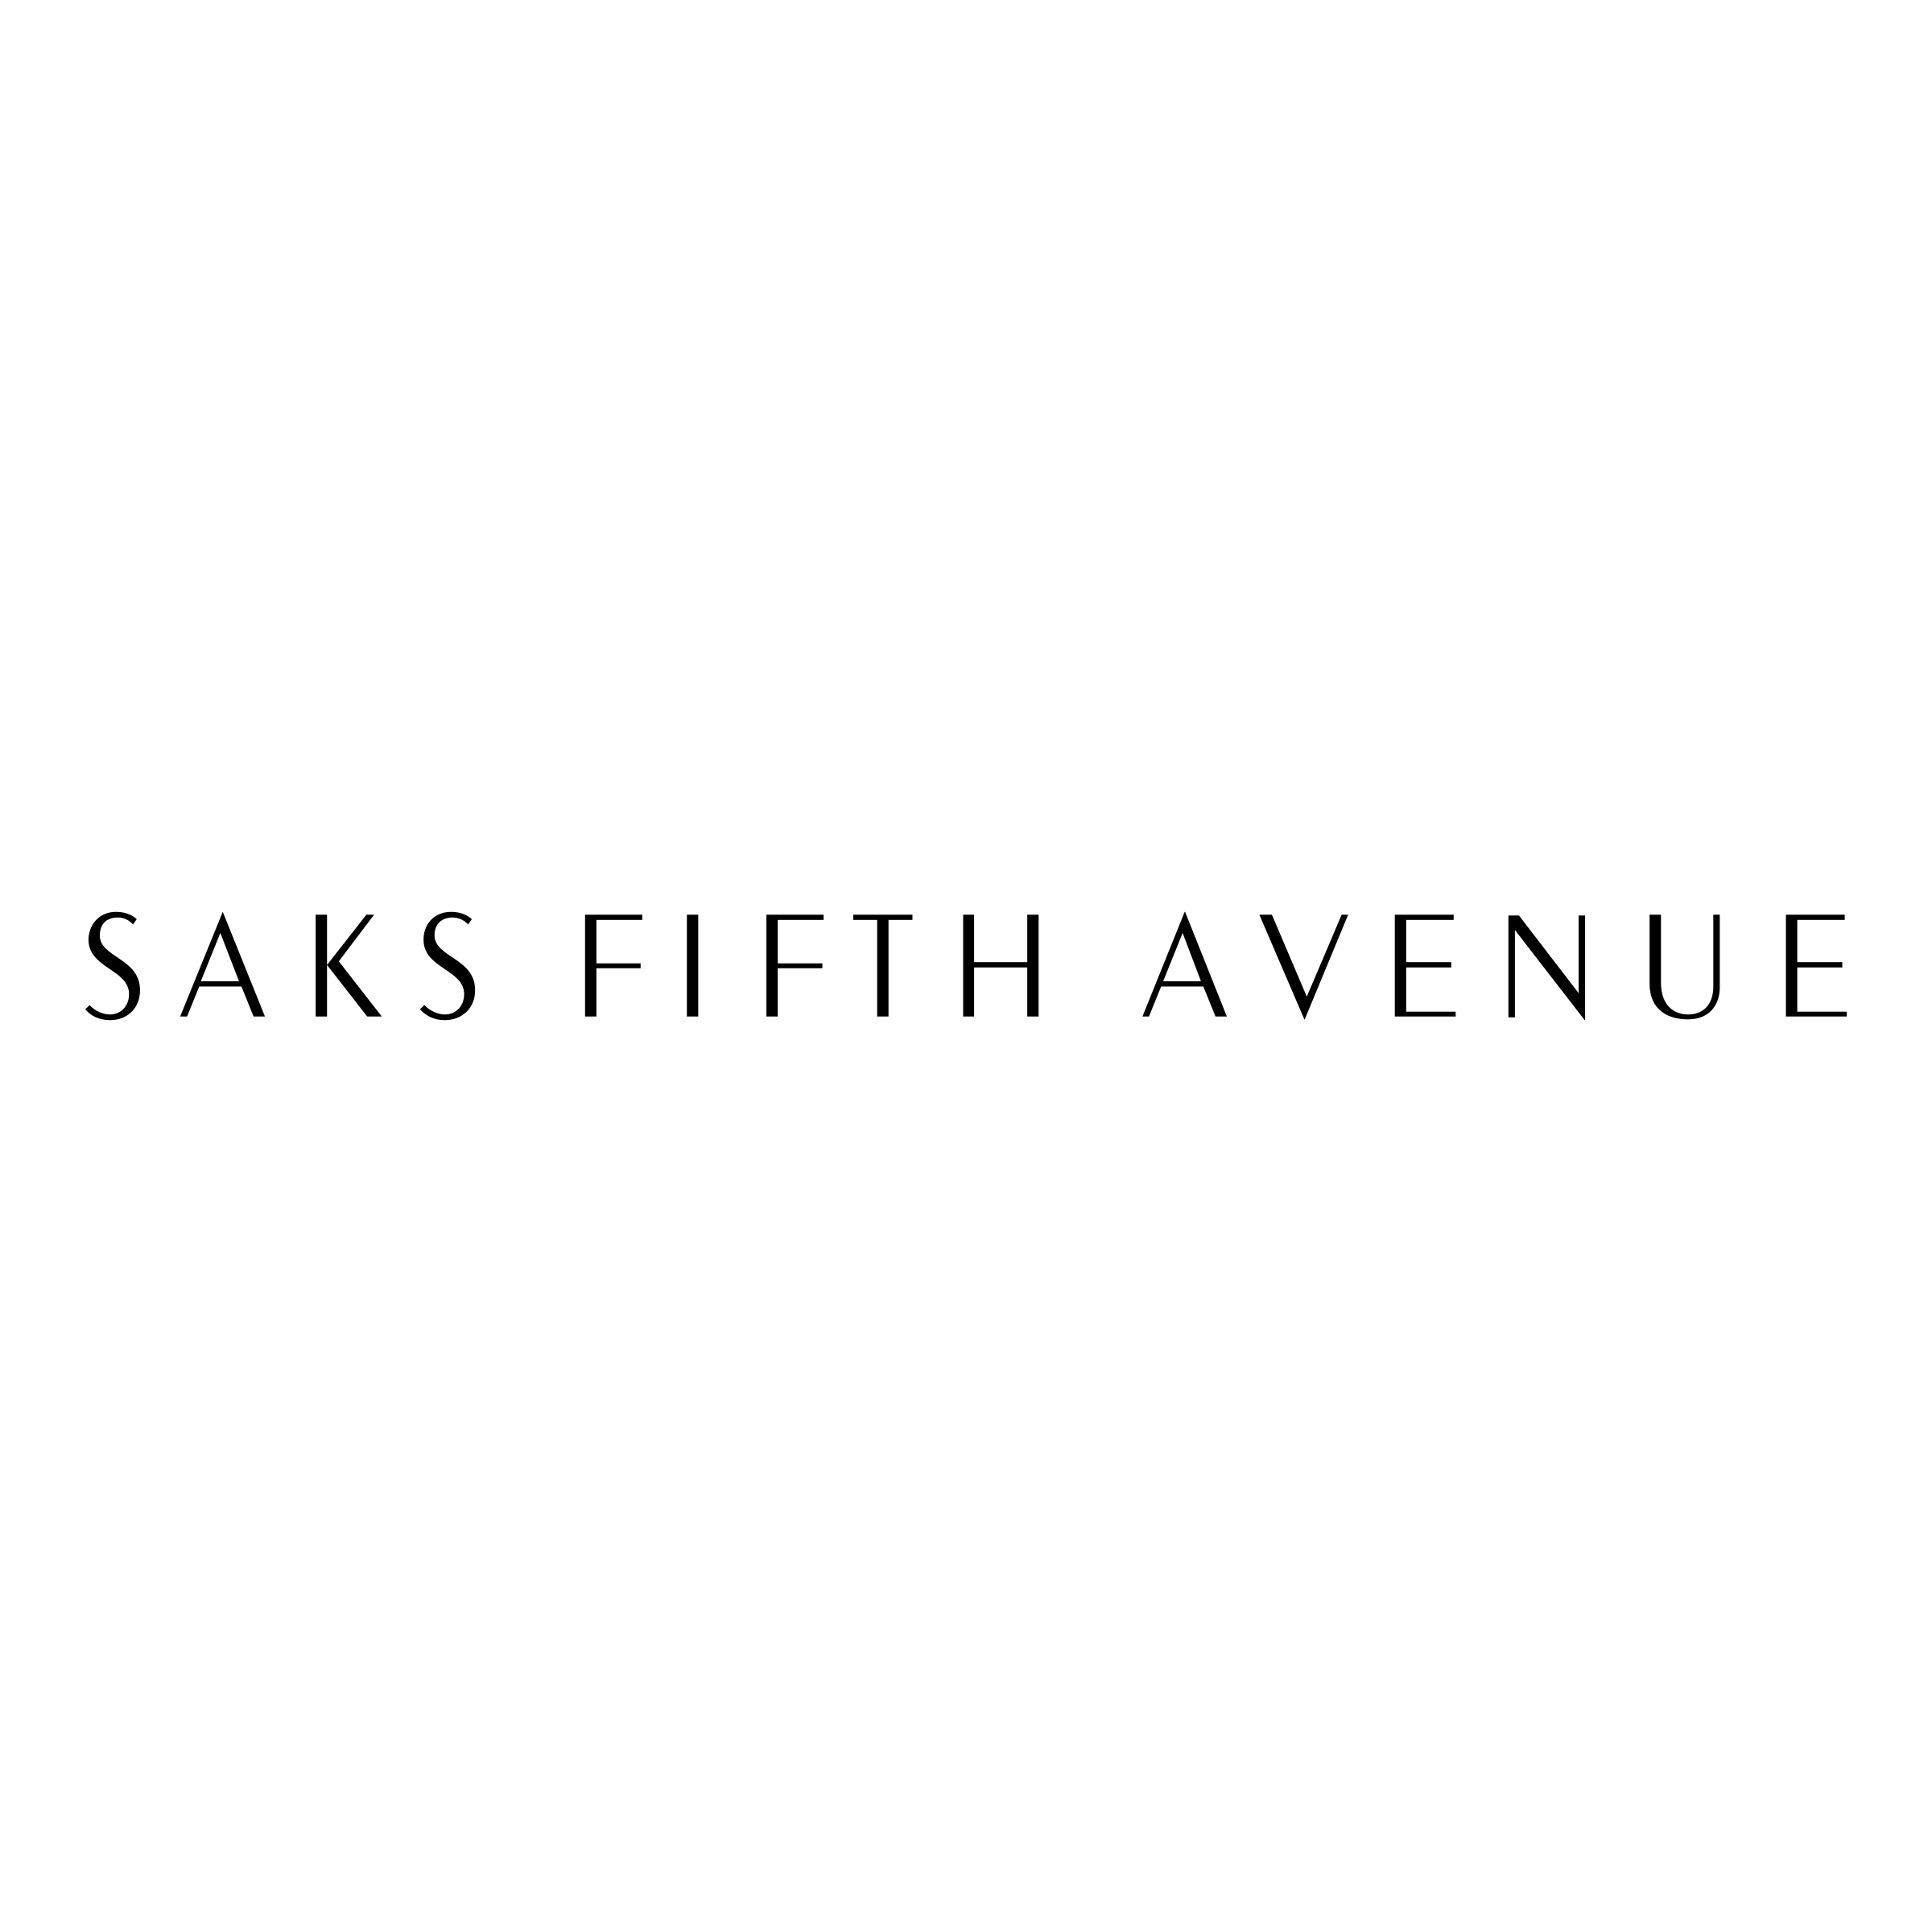 Saks Fifth Avenue Logo - Saks Fifth Avenue Logo PNG Transparent & SVG Vector - Freebie Supply